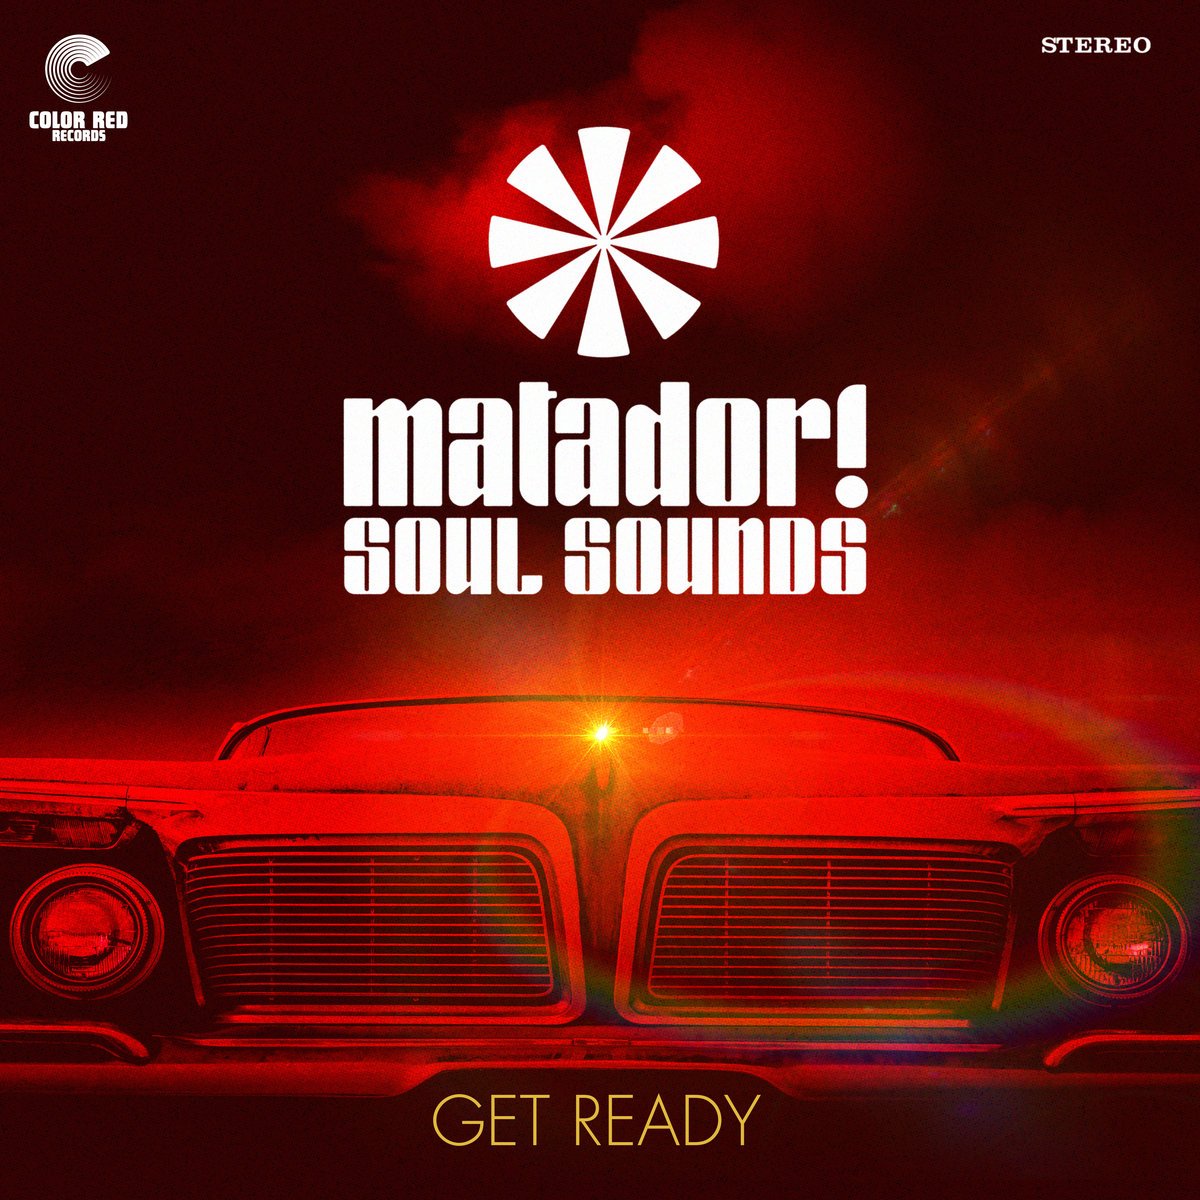 Matador! Soul Sounds Get Ready.jpeg